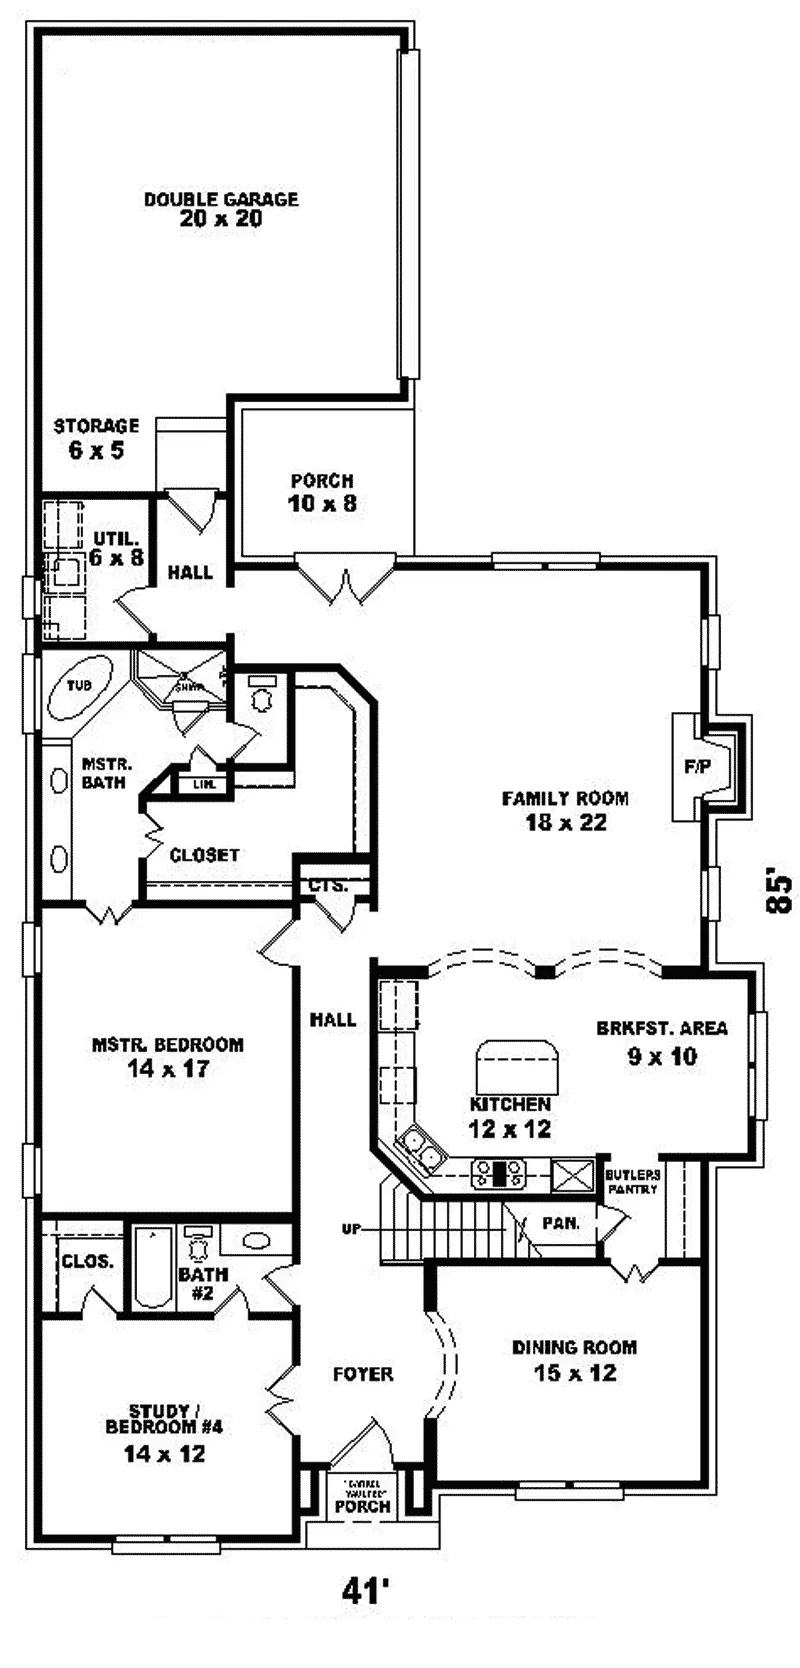 Tudor House Plan First Floor - Trafalgar English Tudor Home 087D-0789 - Shop House Plans and More